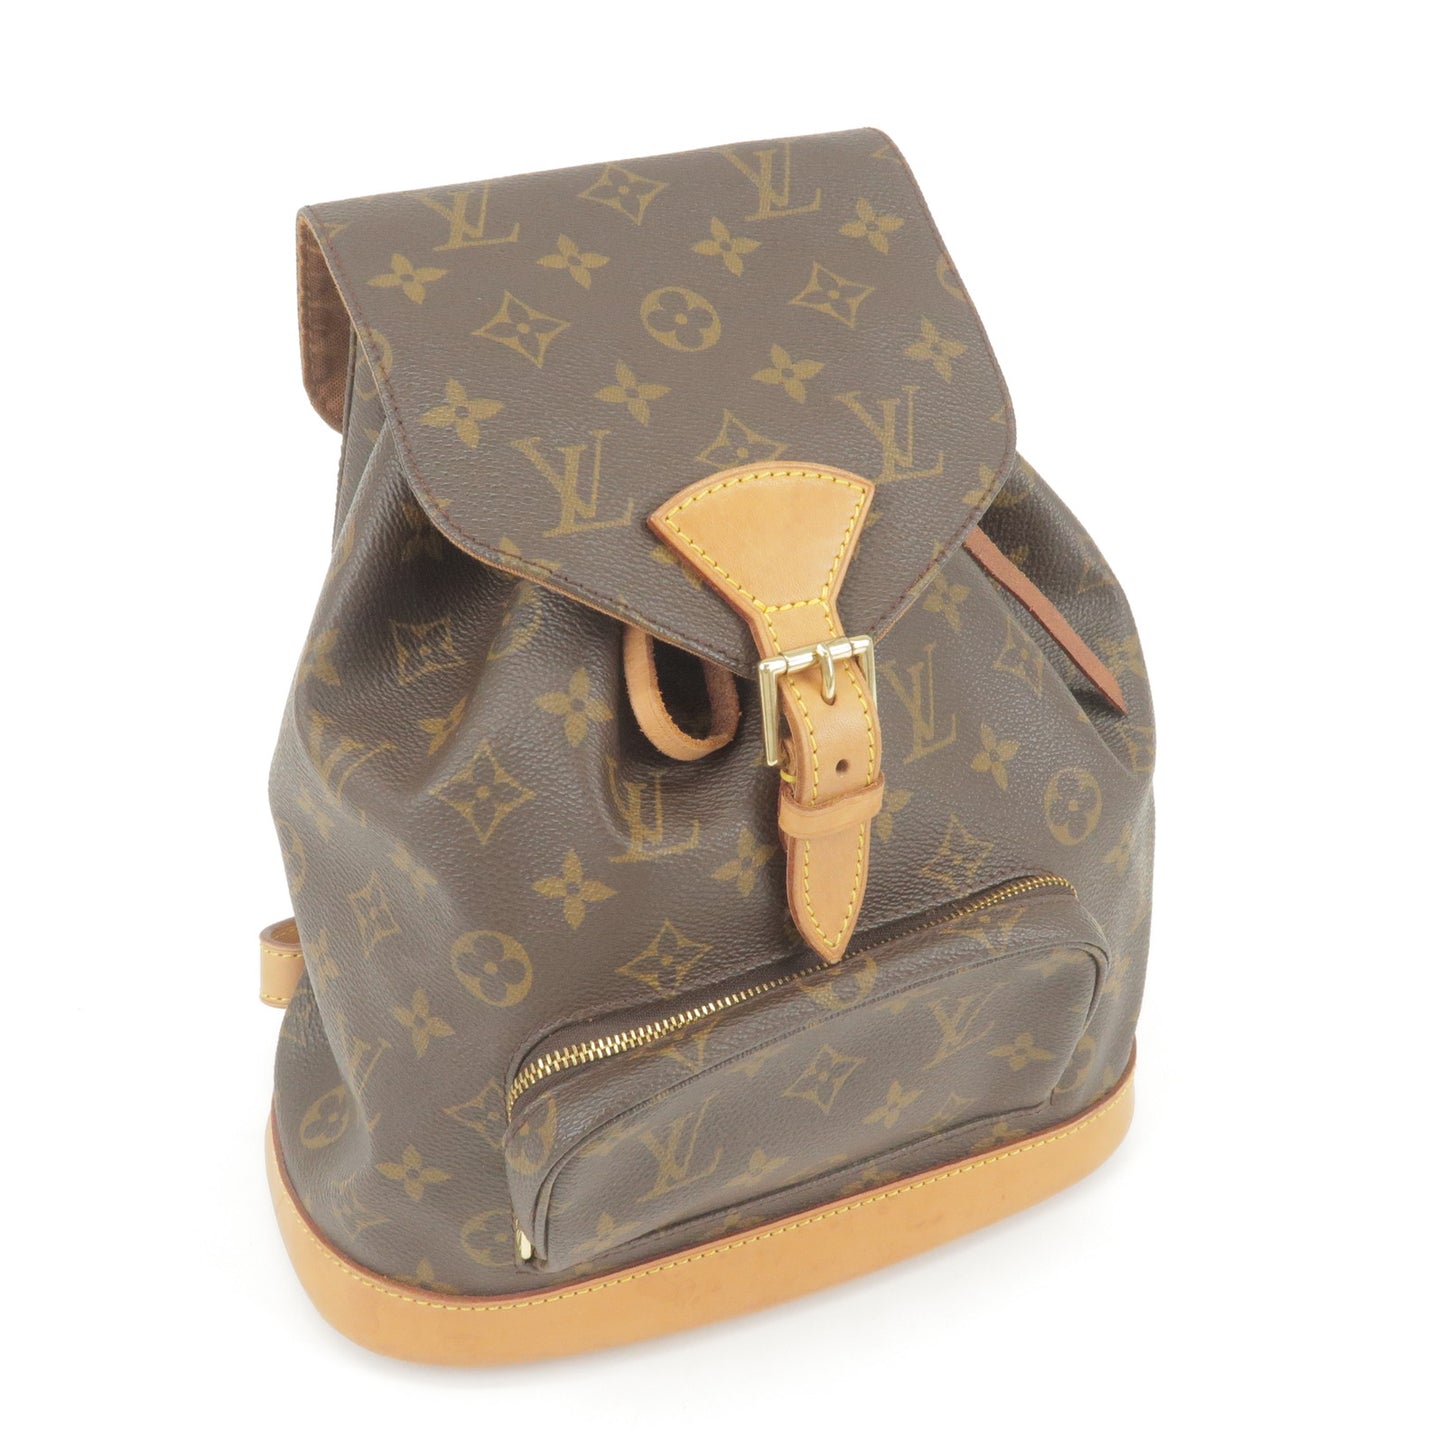 Sold at Auction: A Louis Vuitton Monogram Montsouris MM Backpack